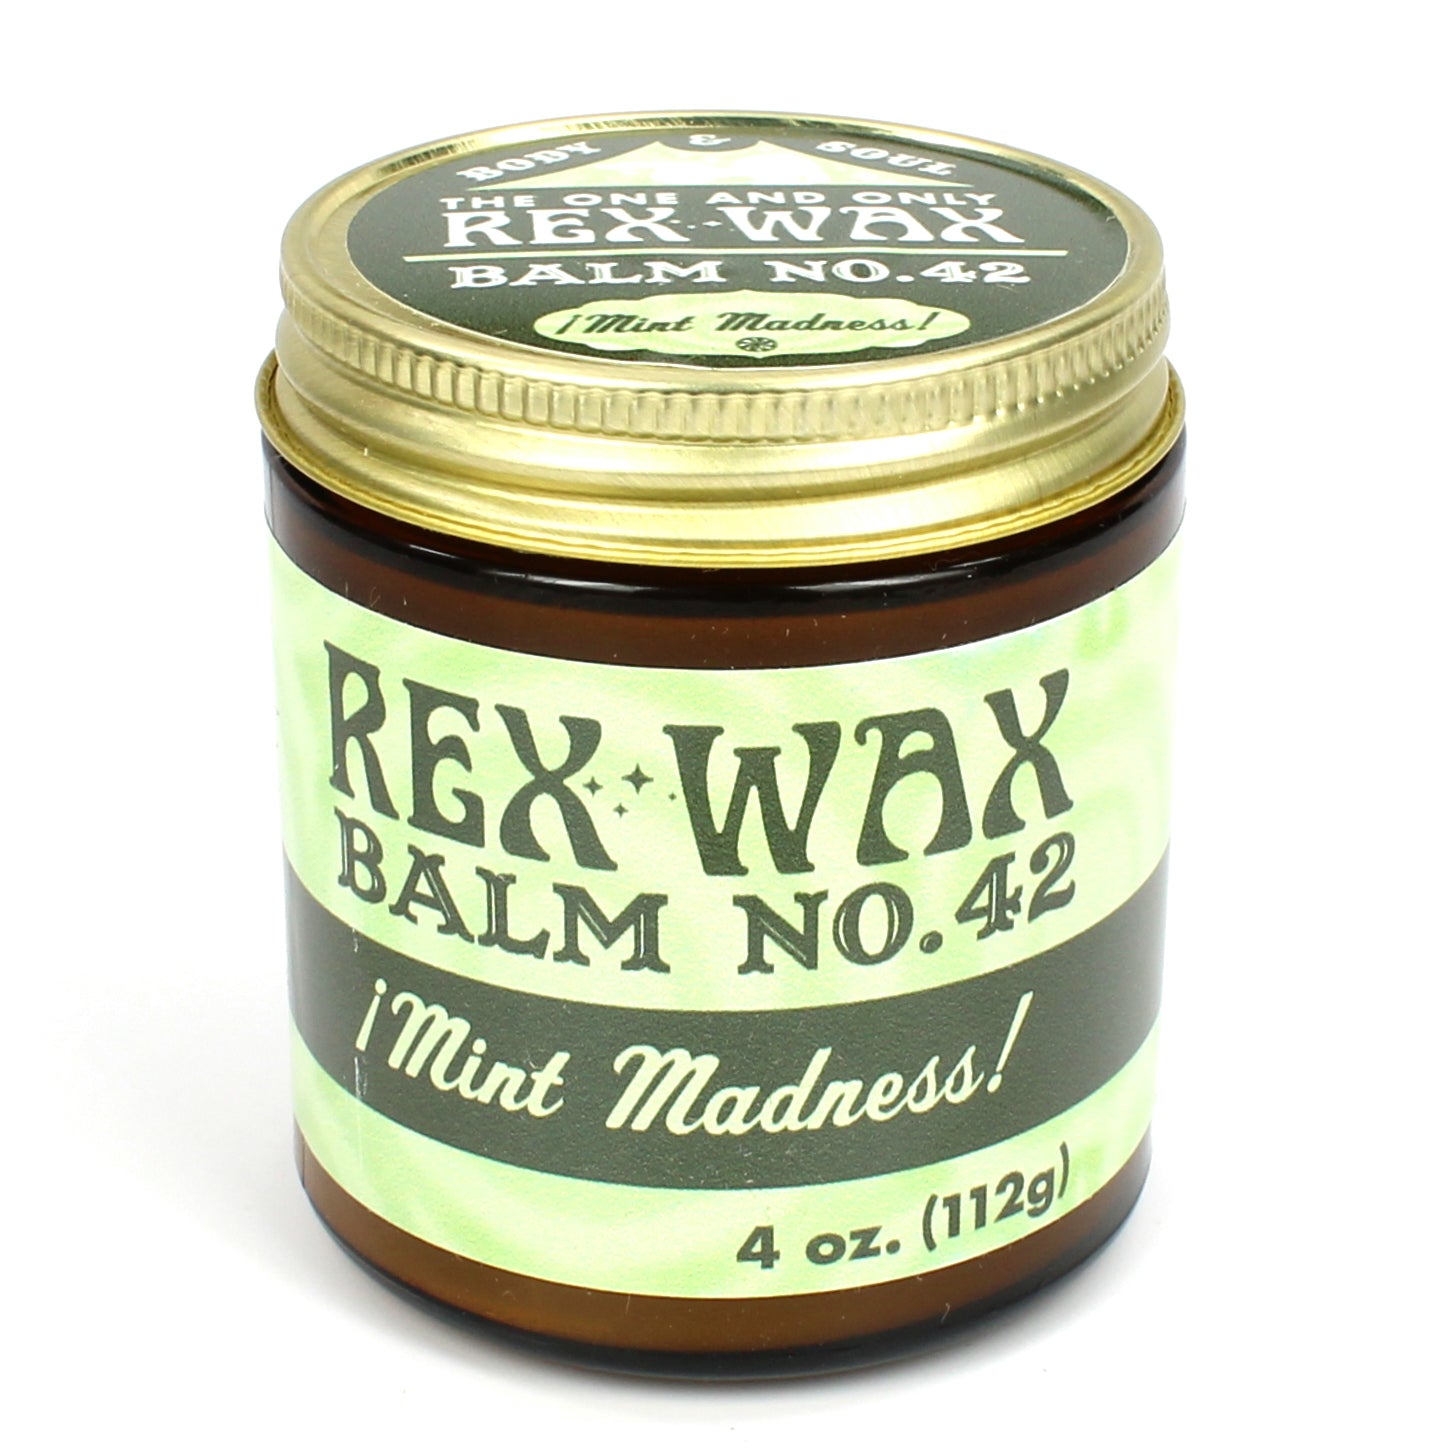 Rex Wax - Balm No.  42 Mint Madness 4oz Pomade